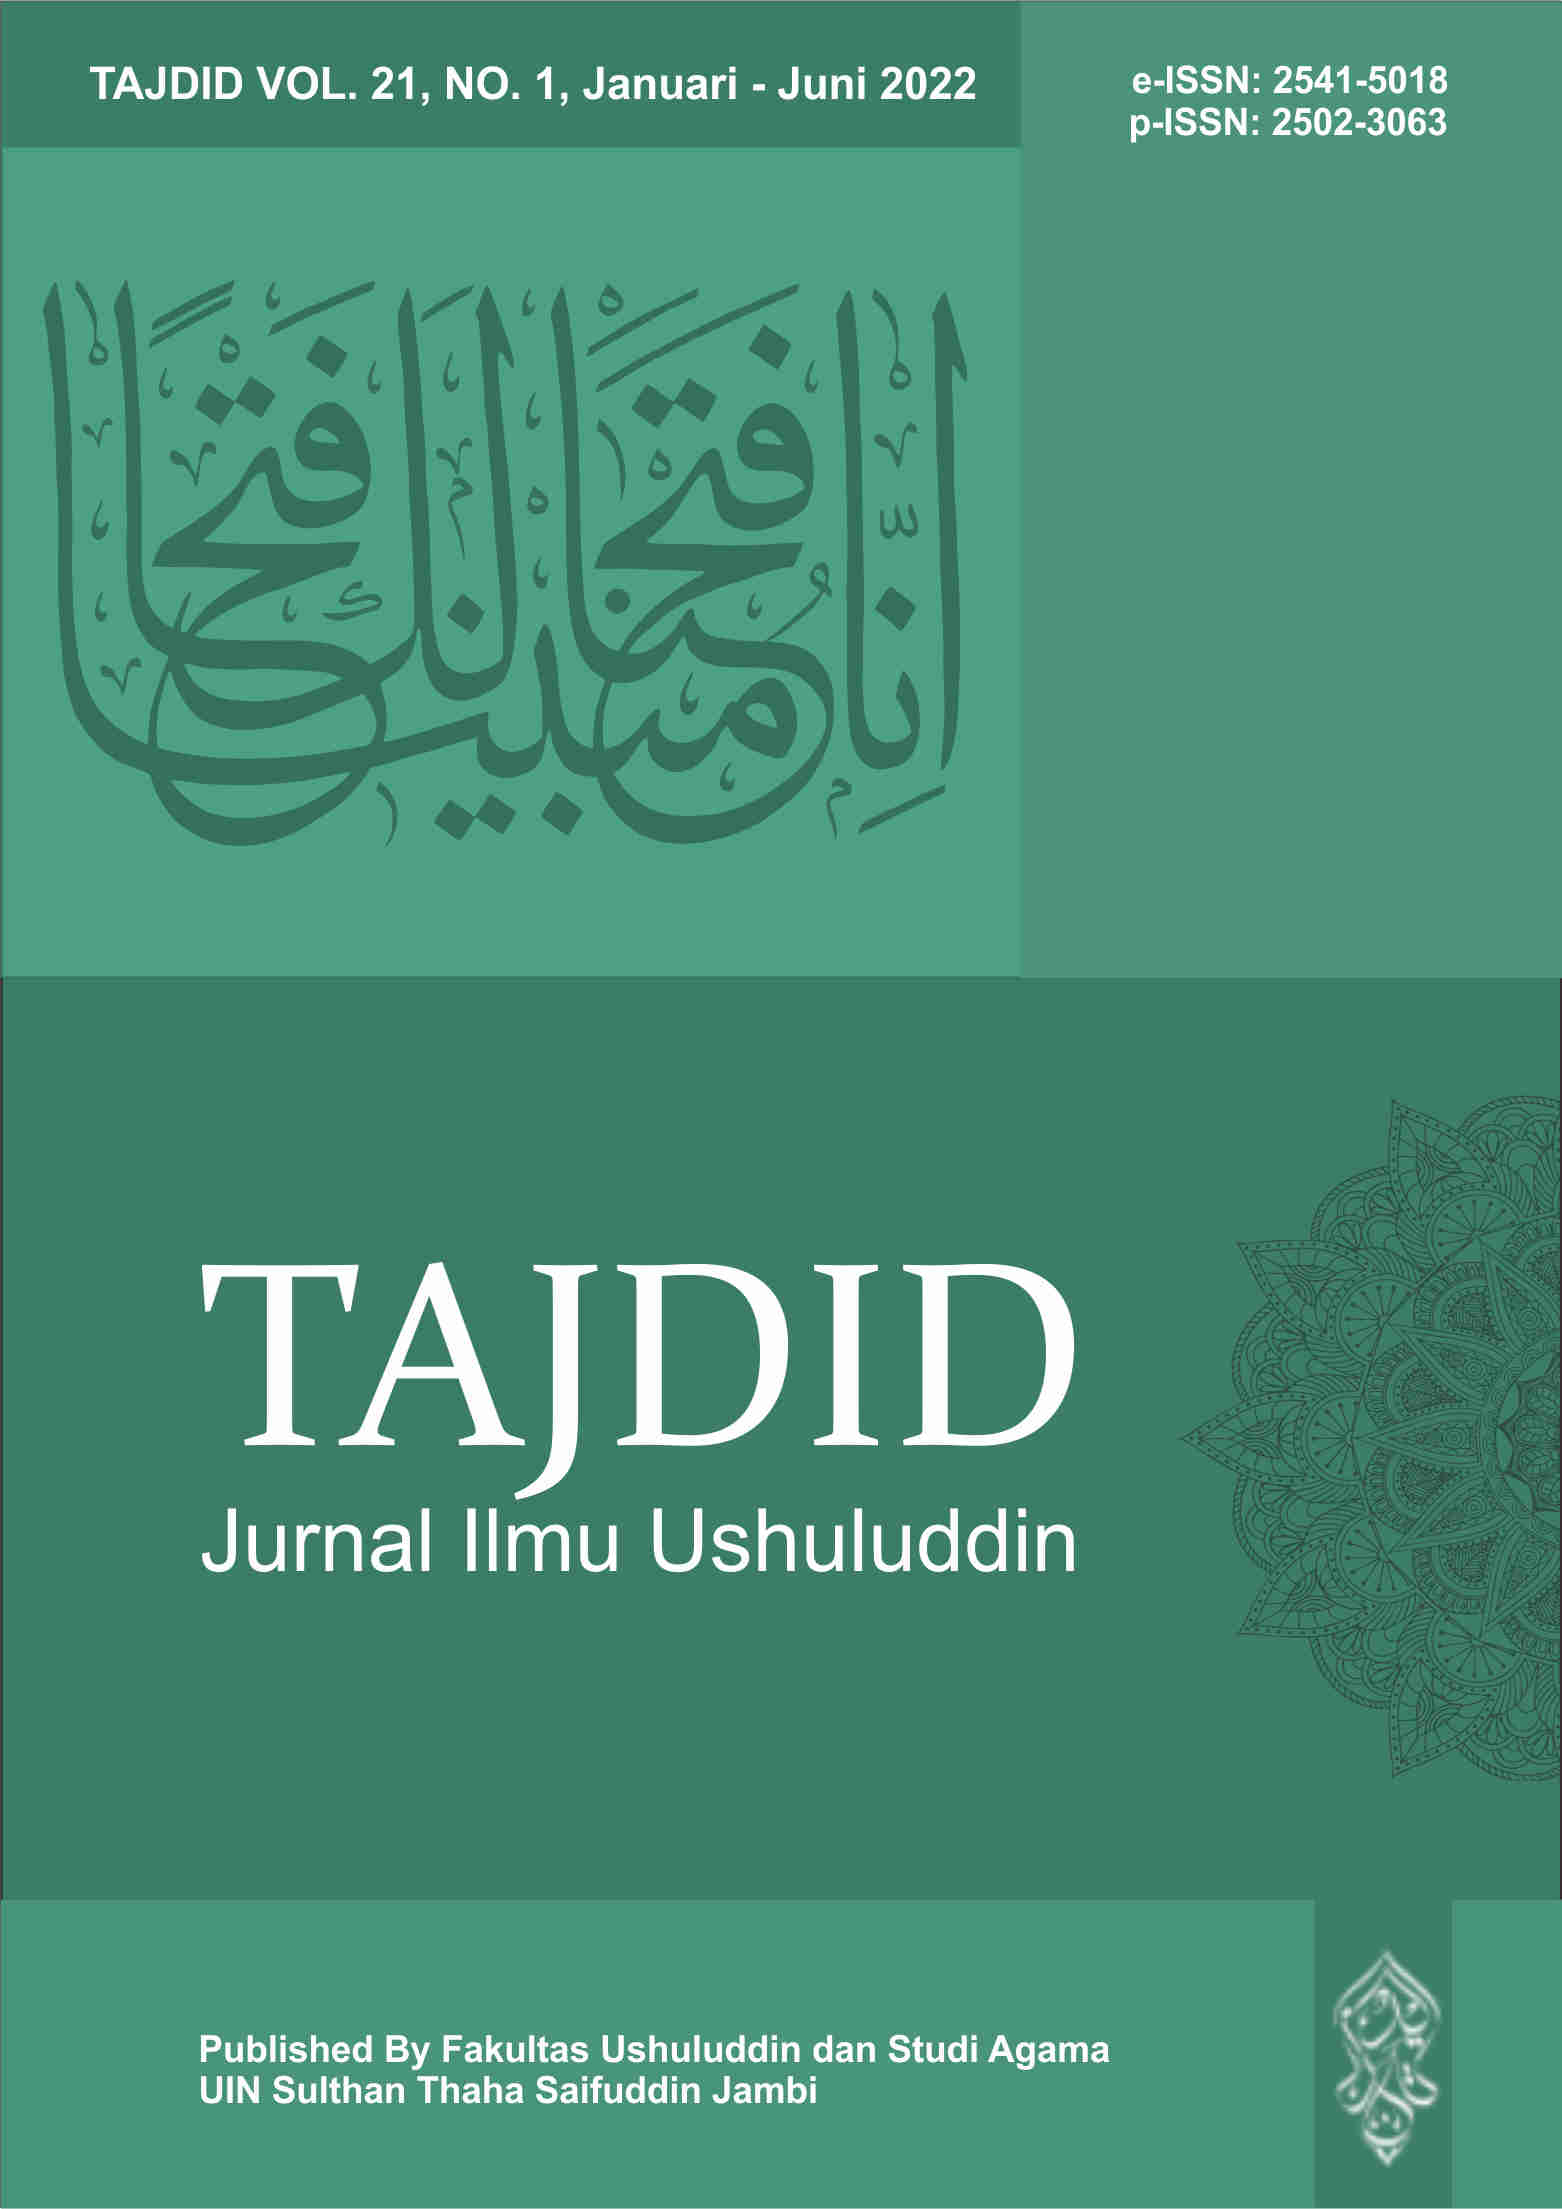 					View Vol. 21 No. 1 (2022): Kajian Ilmu Ushuluddin dan Studi Agama
				